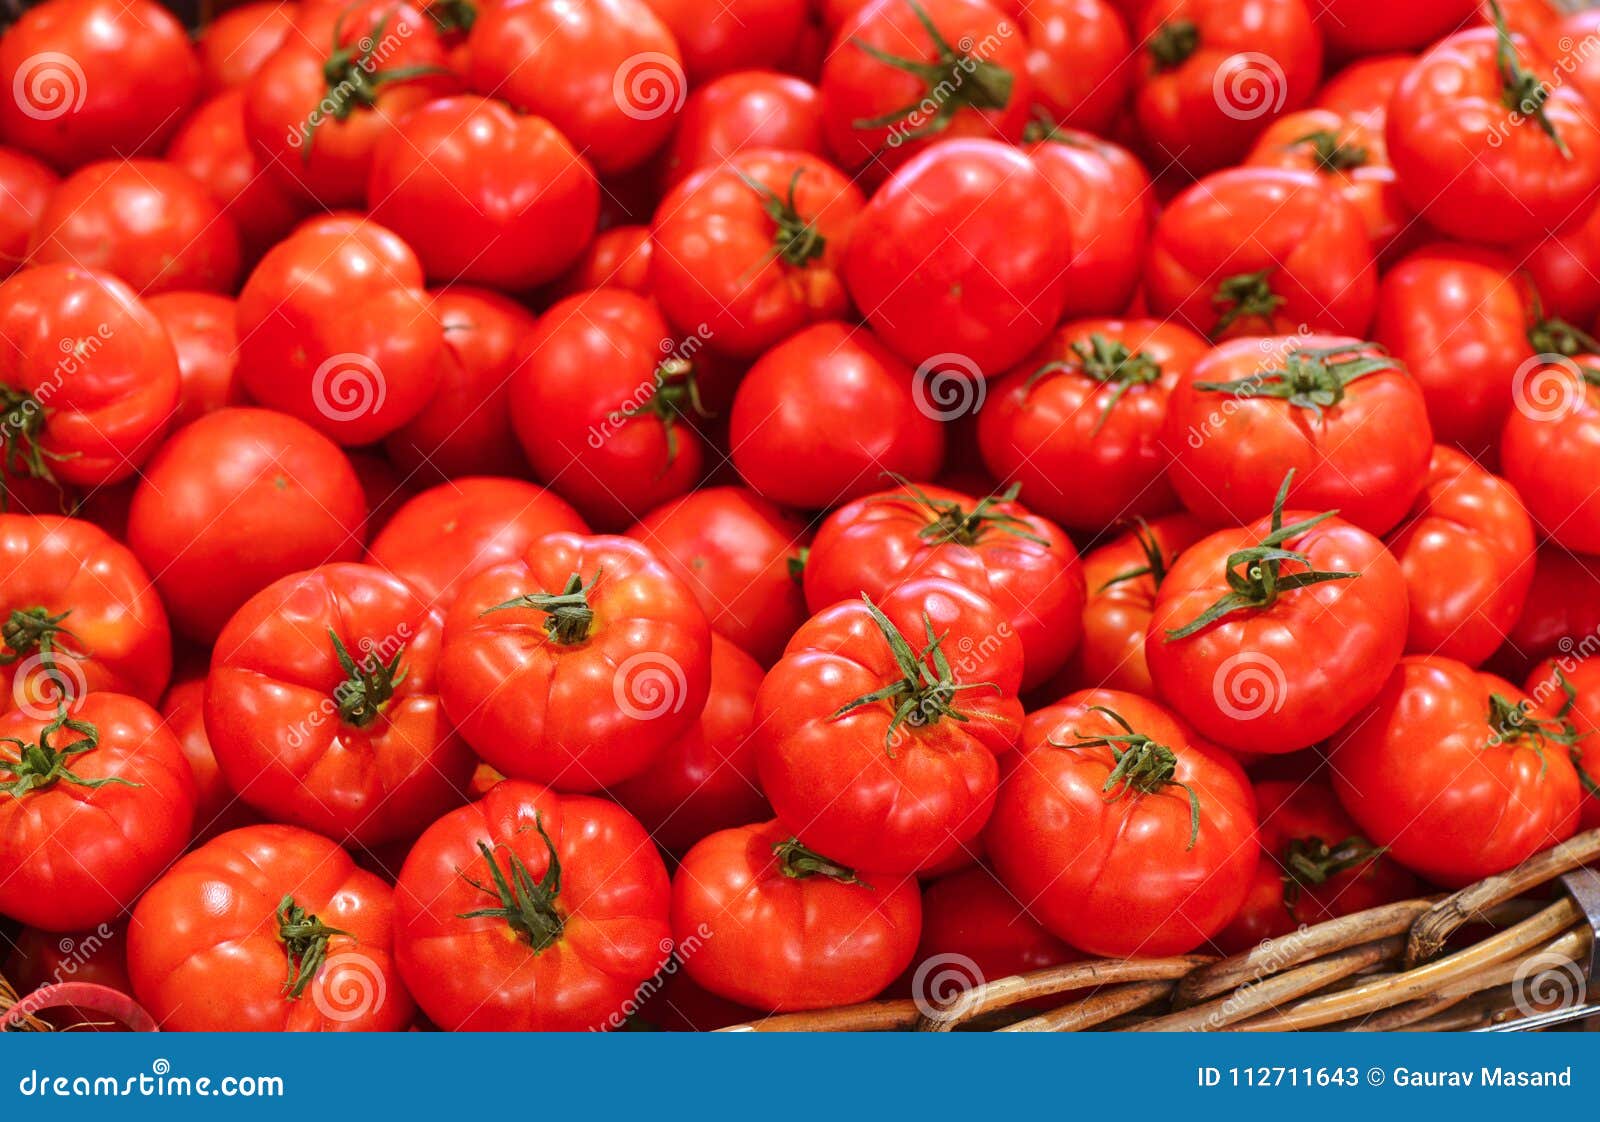 fresh produce-tomatoes in australian market